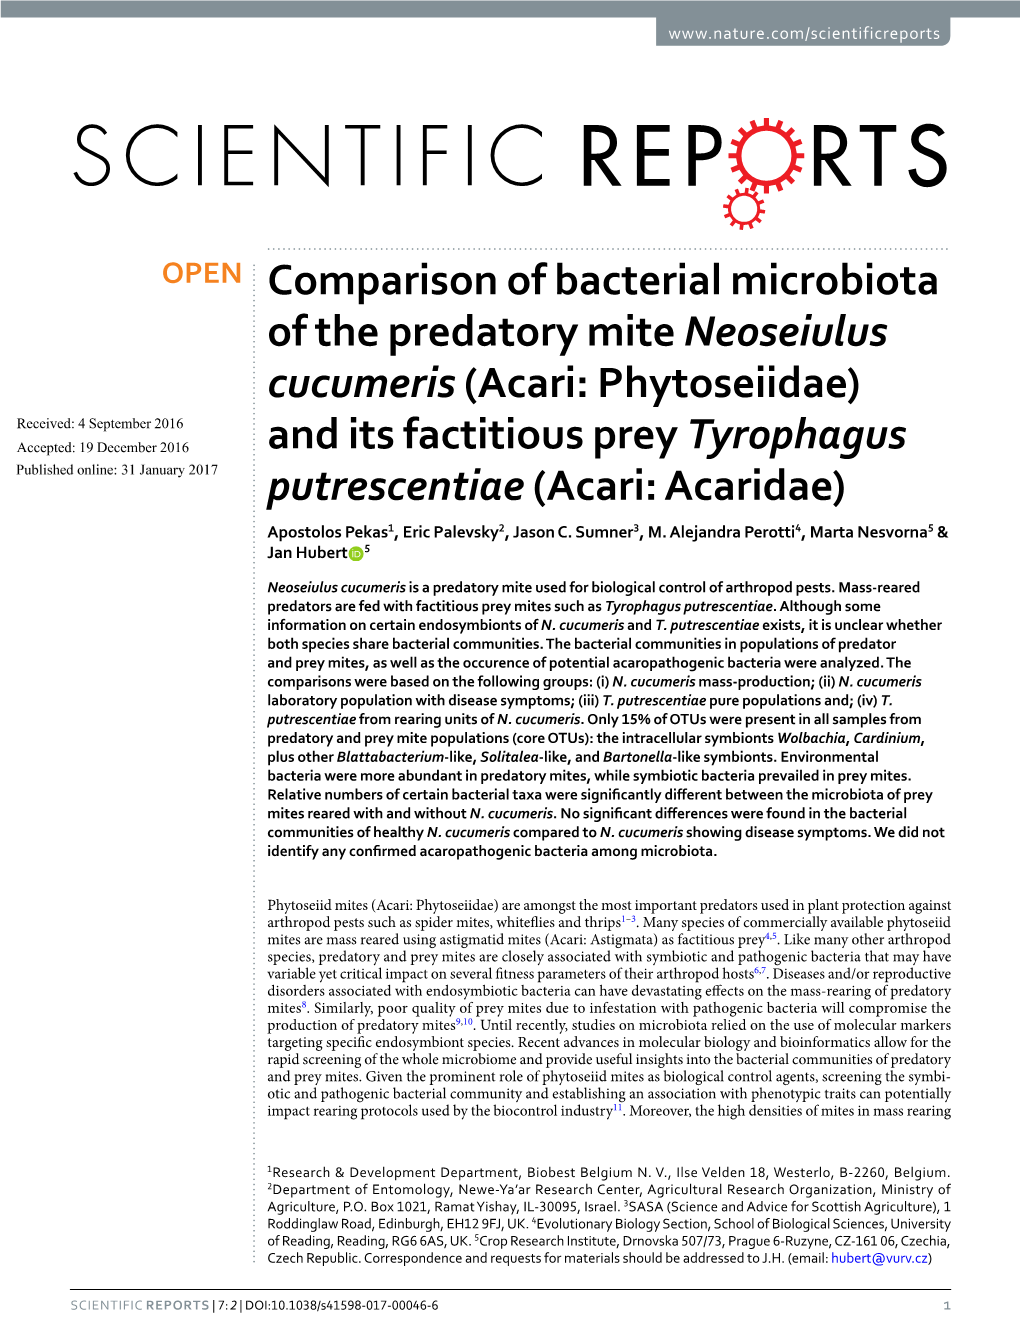 Comparison of Bacterial Microbiota of the Predatory Mite